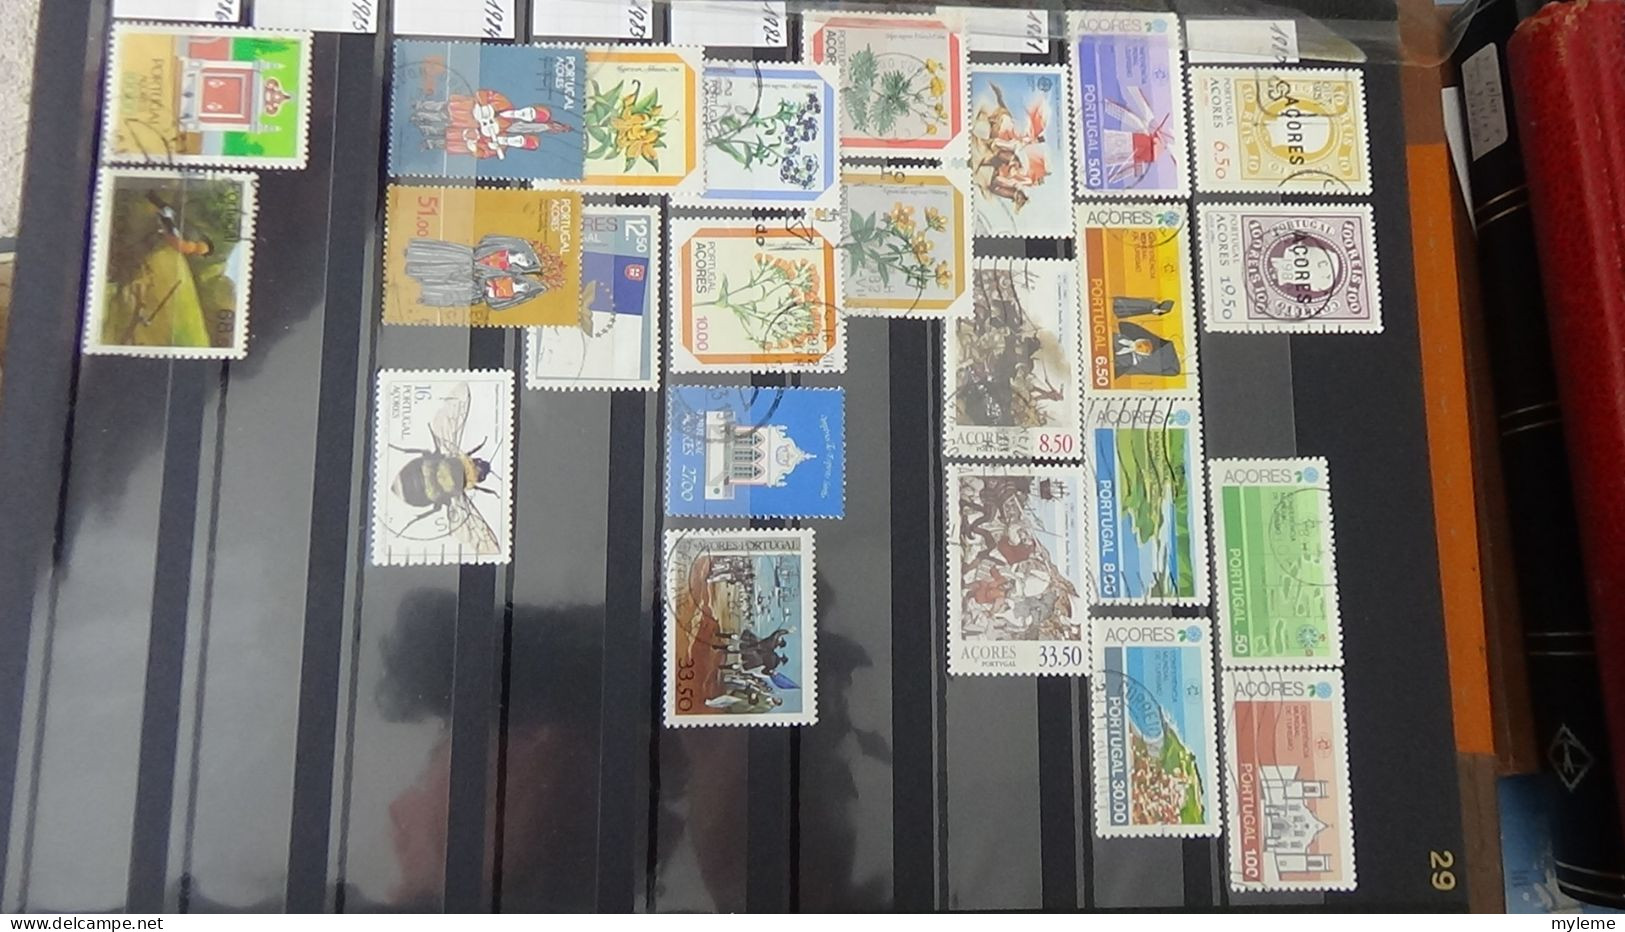 BF31 Ensemble de timbres de divers pays + Merson N° 145 + 146 + 156 ** Cote 470 euros